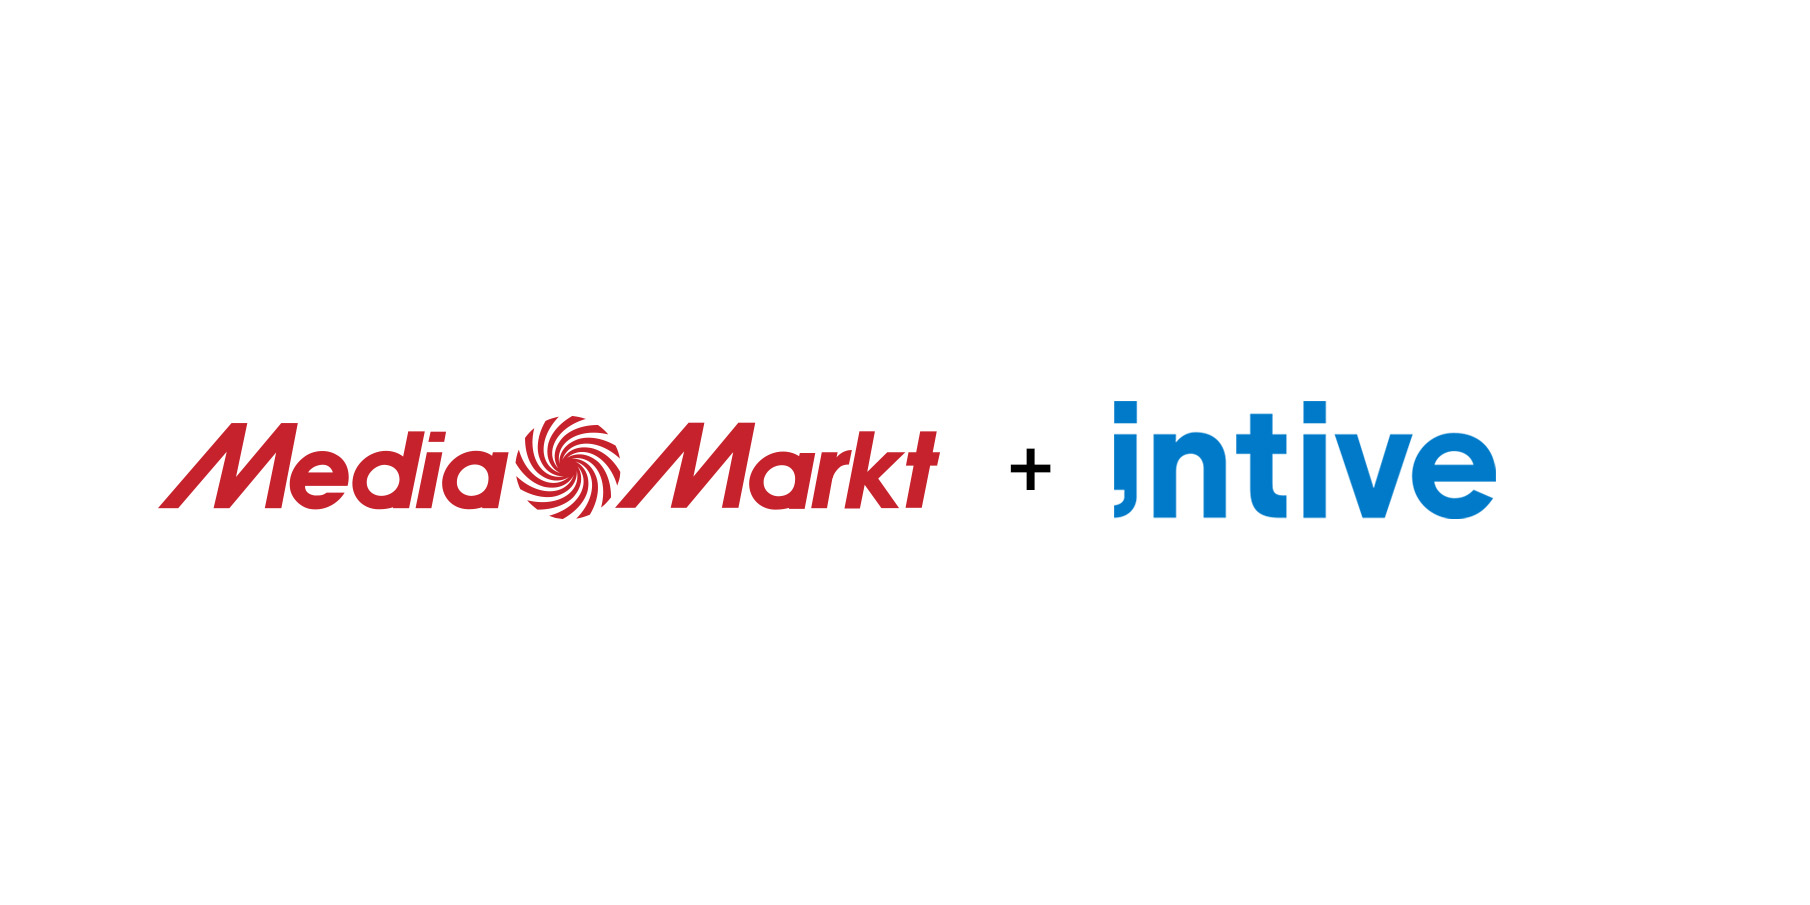 MediaMarkt Polska and intive Set to Build a New Cutting-Edge eCommerce  Platform